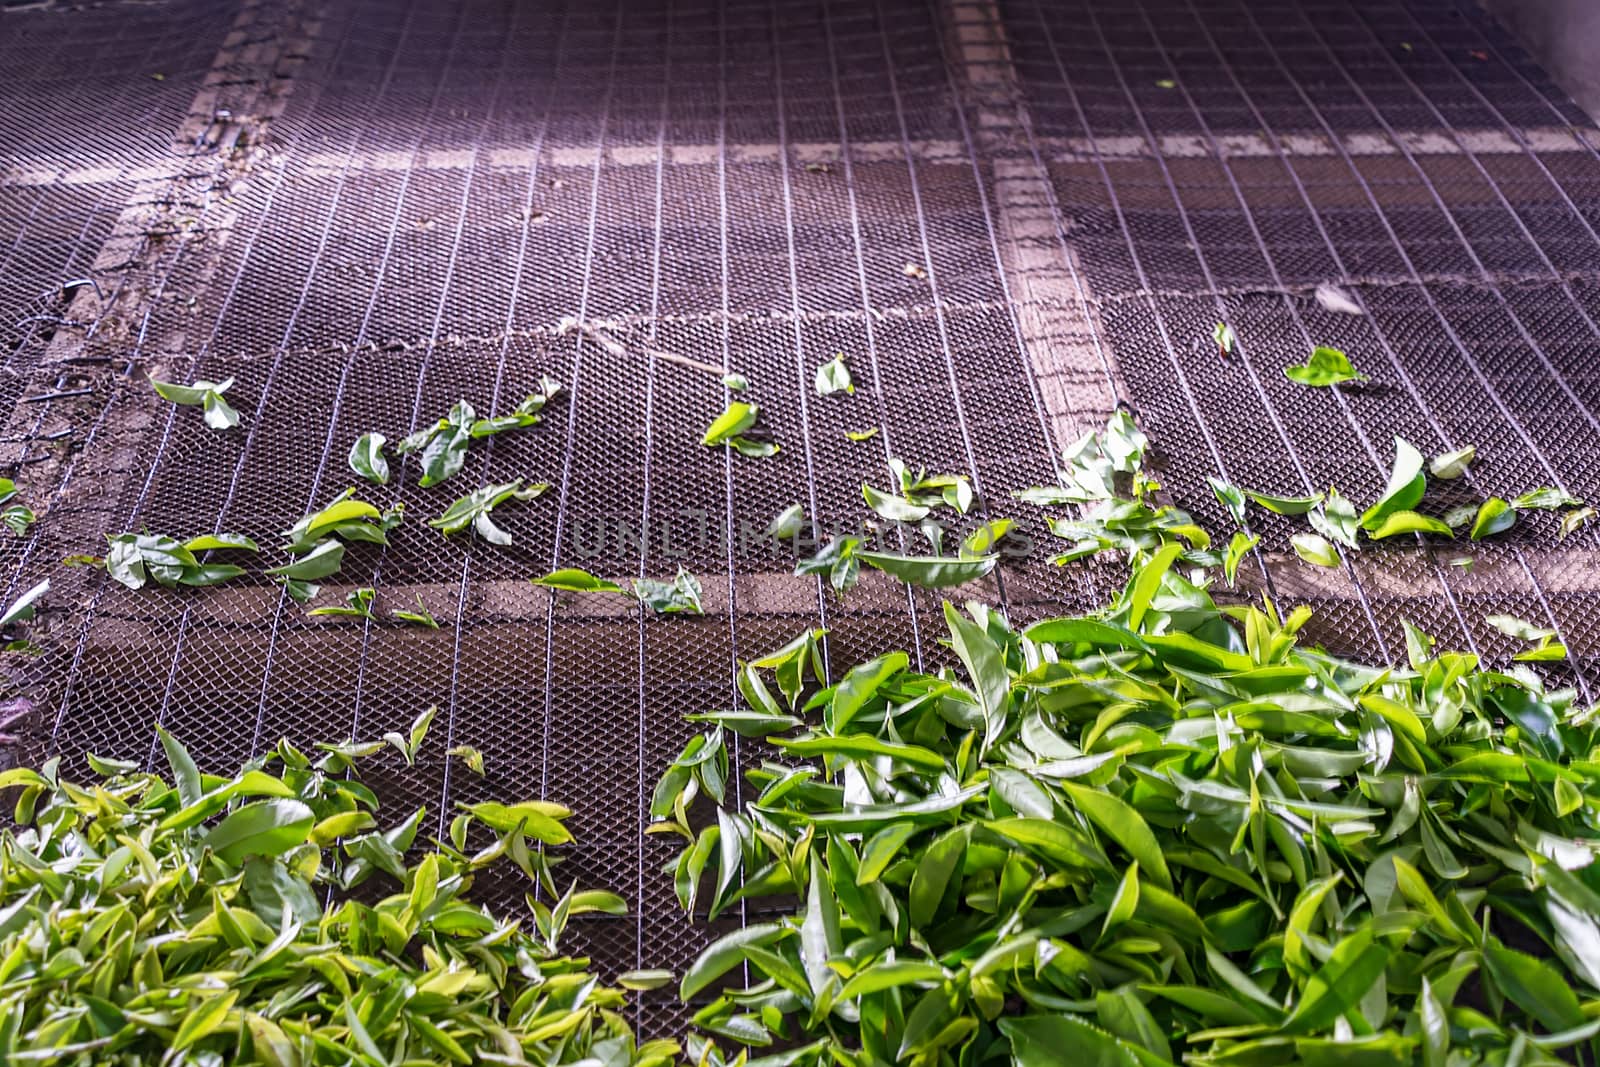 Nyura Ellia, Sri Lanka: Freshly picked tea leaves drying as part of the tea packaging process